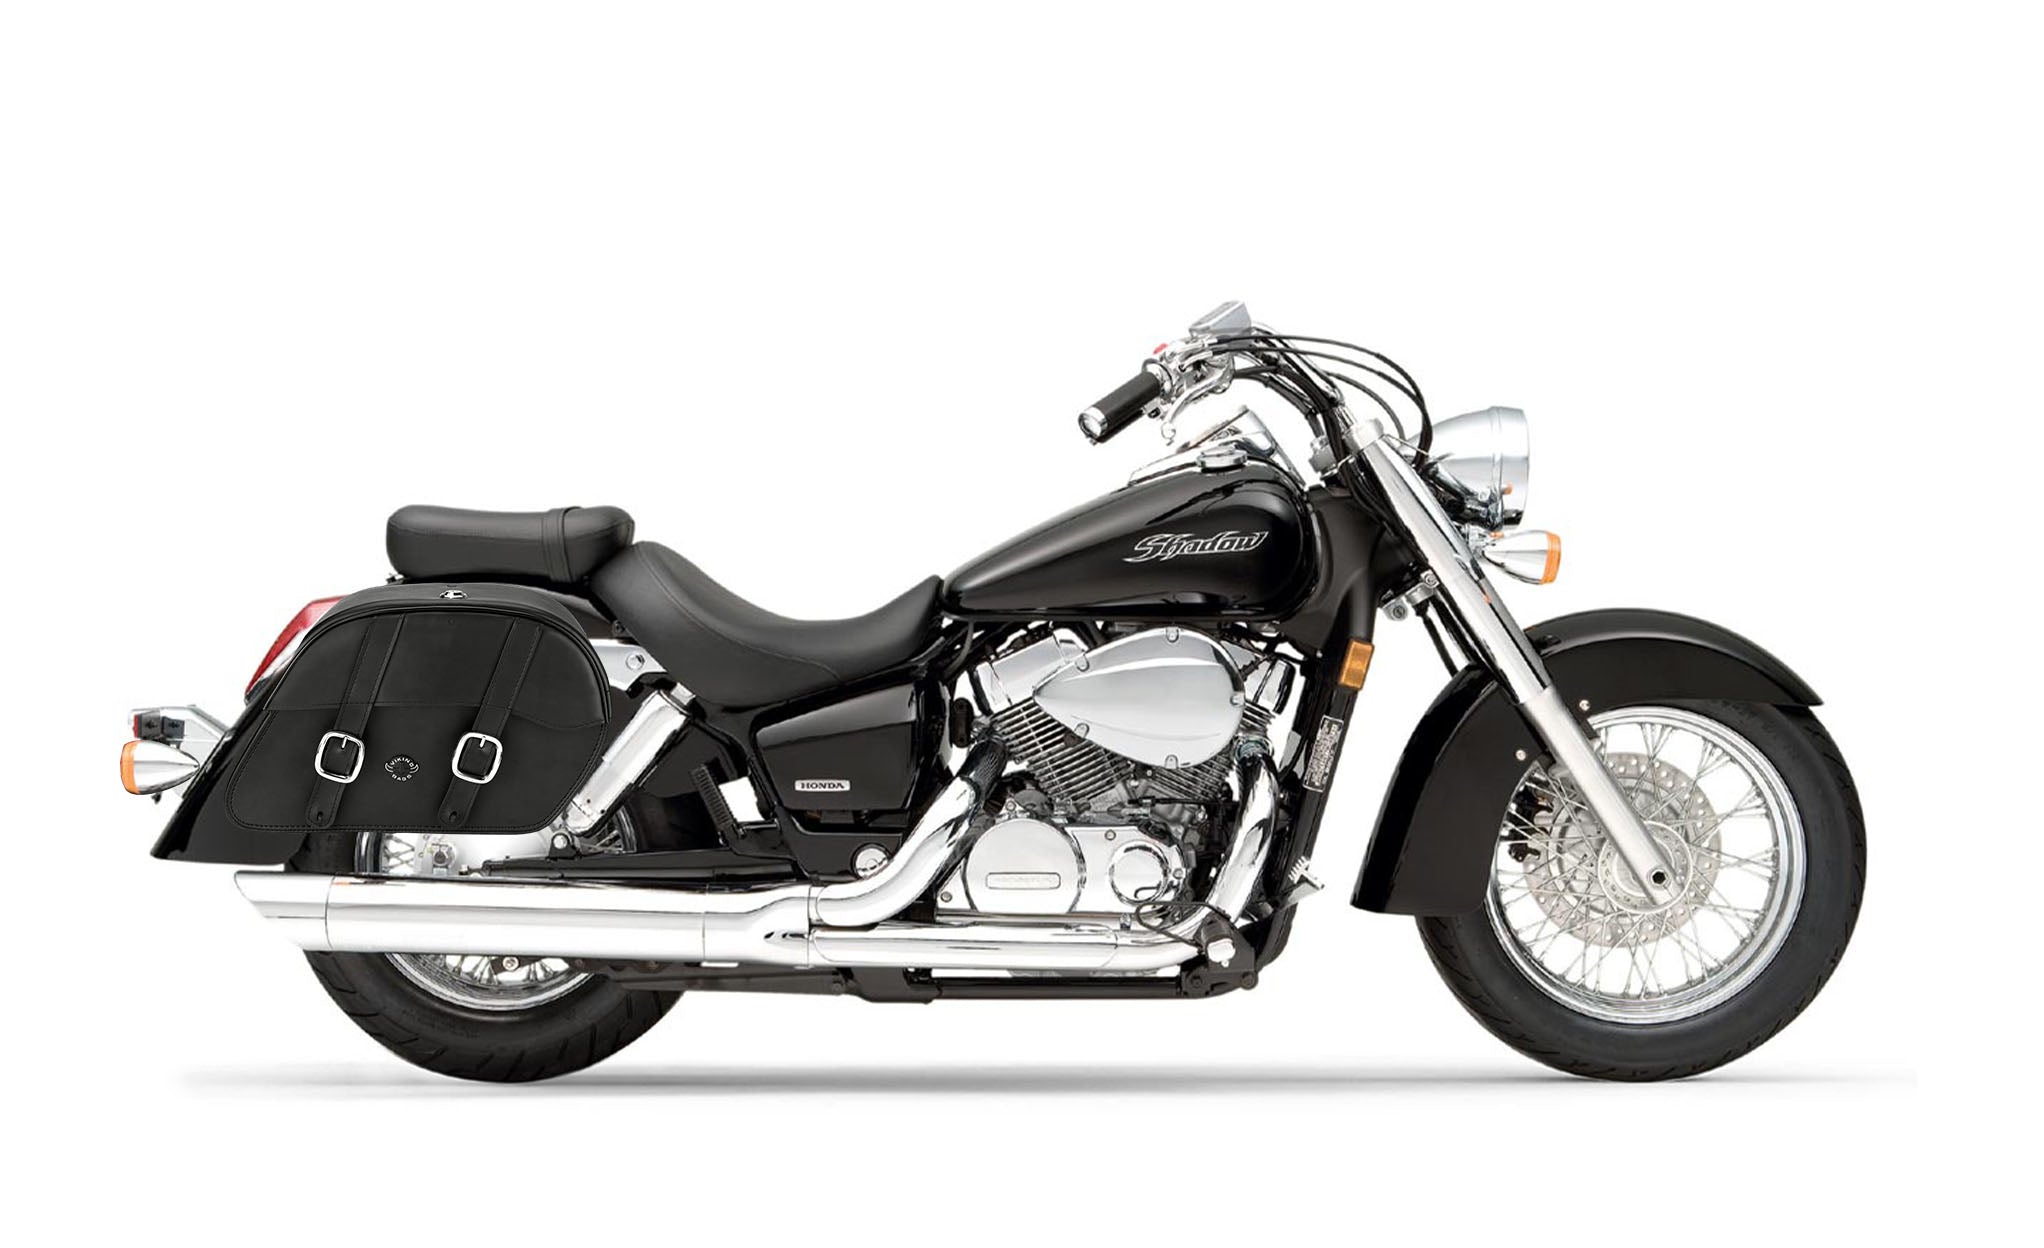 Viking Skarner Medium Lockable Honda Shadow 750 Aero Leather Motorcycle Saddlebags on Bike Photo @expand